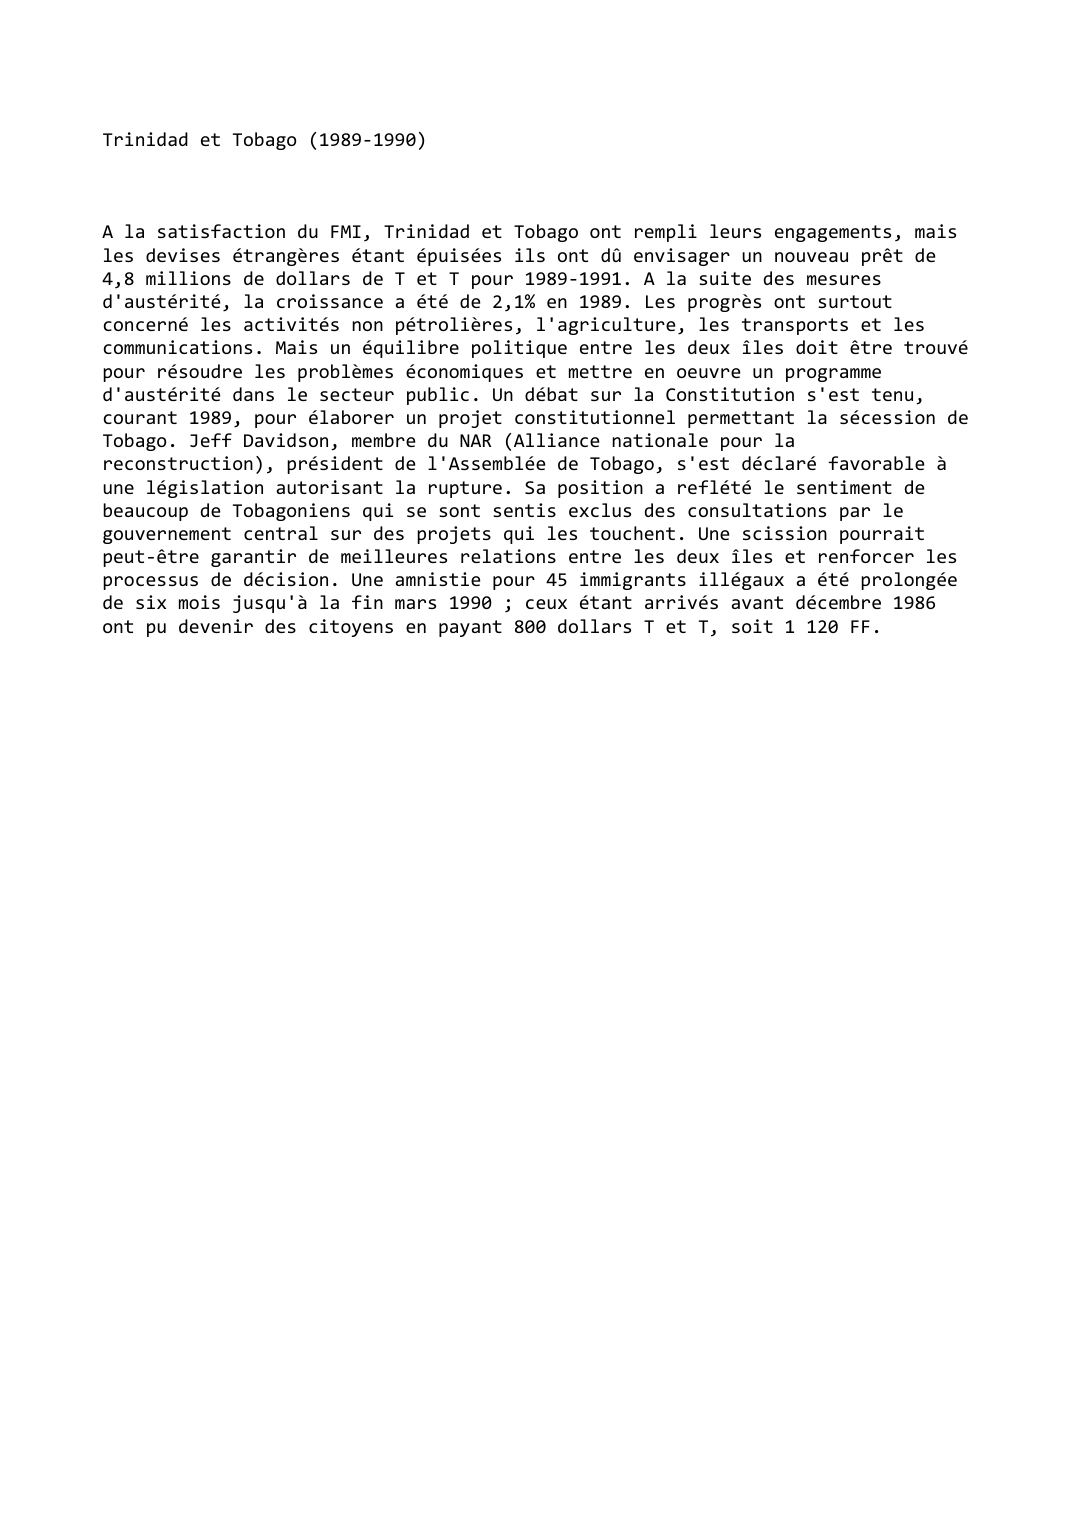 Prévisualisation du document Trinidad et Tobago (1989-1990)